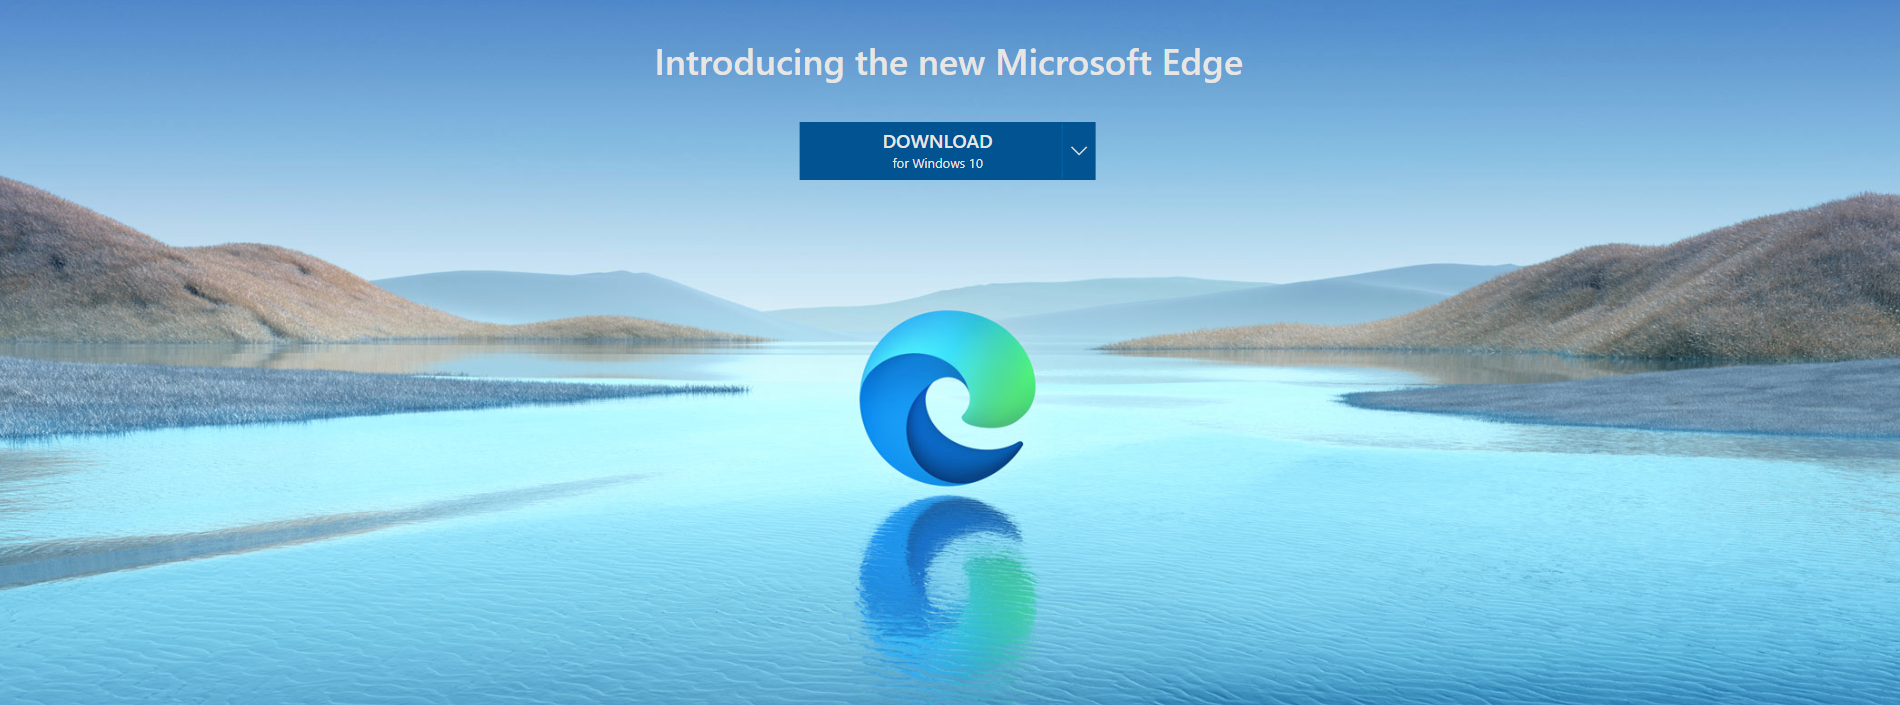 Microsoft-Edge-Featured